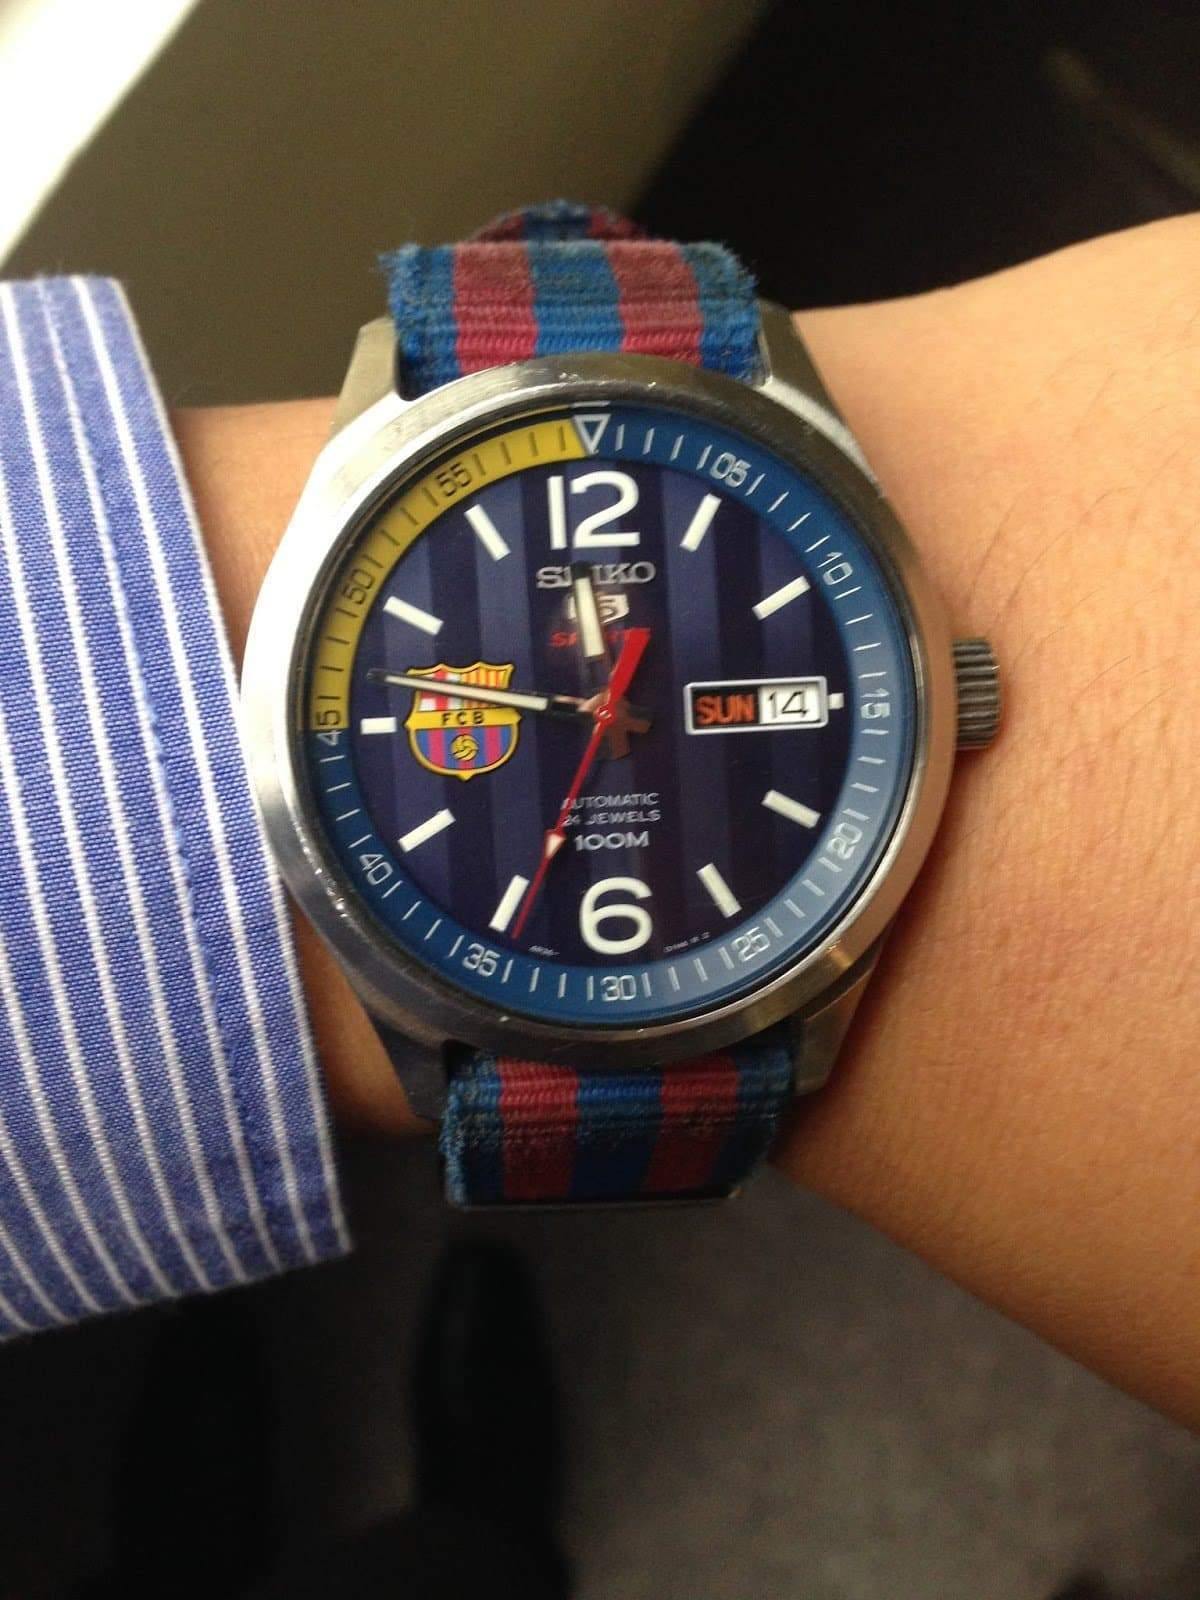 Seiko 5 Sports FC Barcelona 100M Blue Dial Men's Watch Nylon Strap SRP303K1 - Prestige